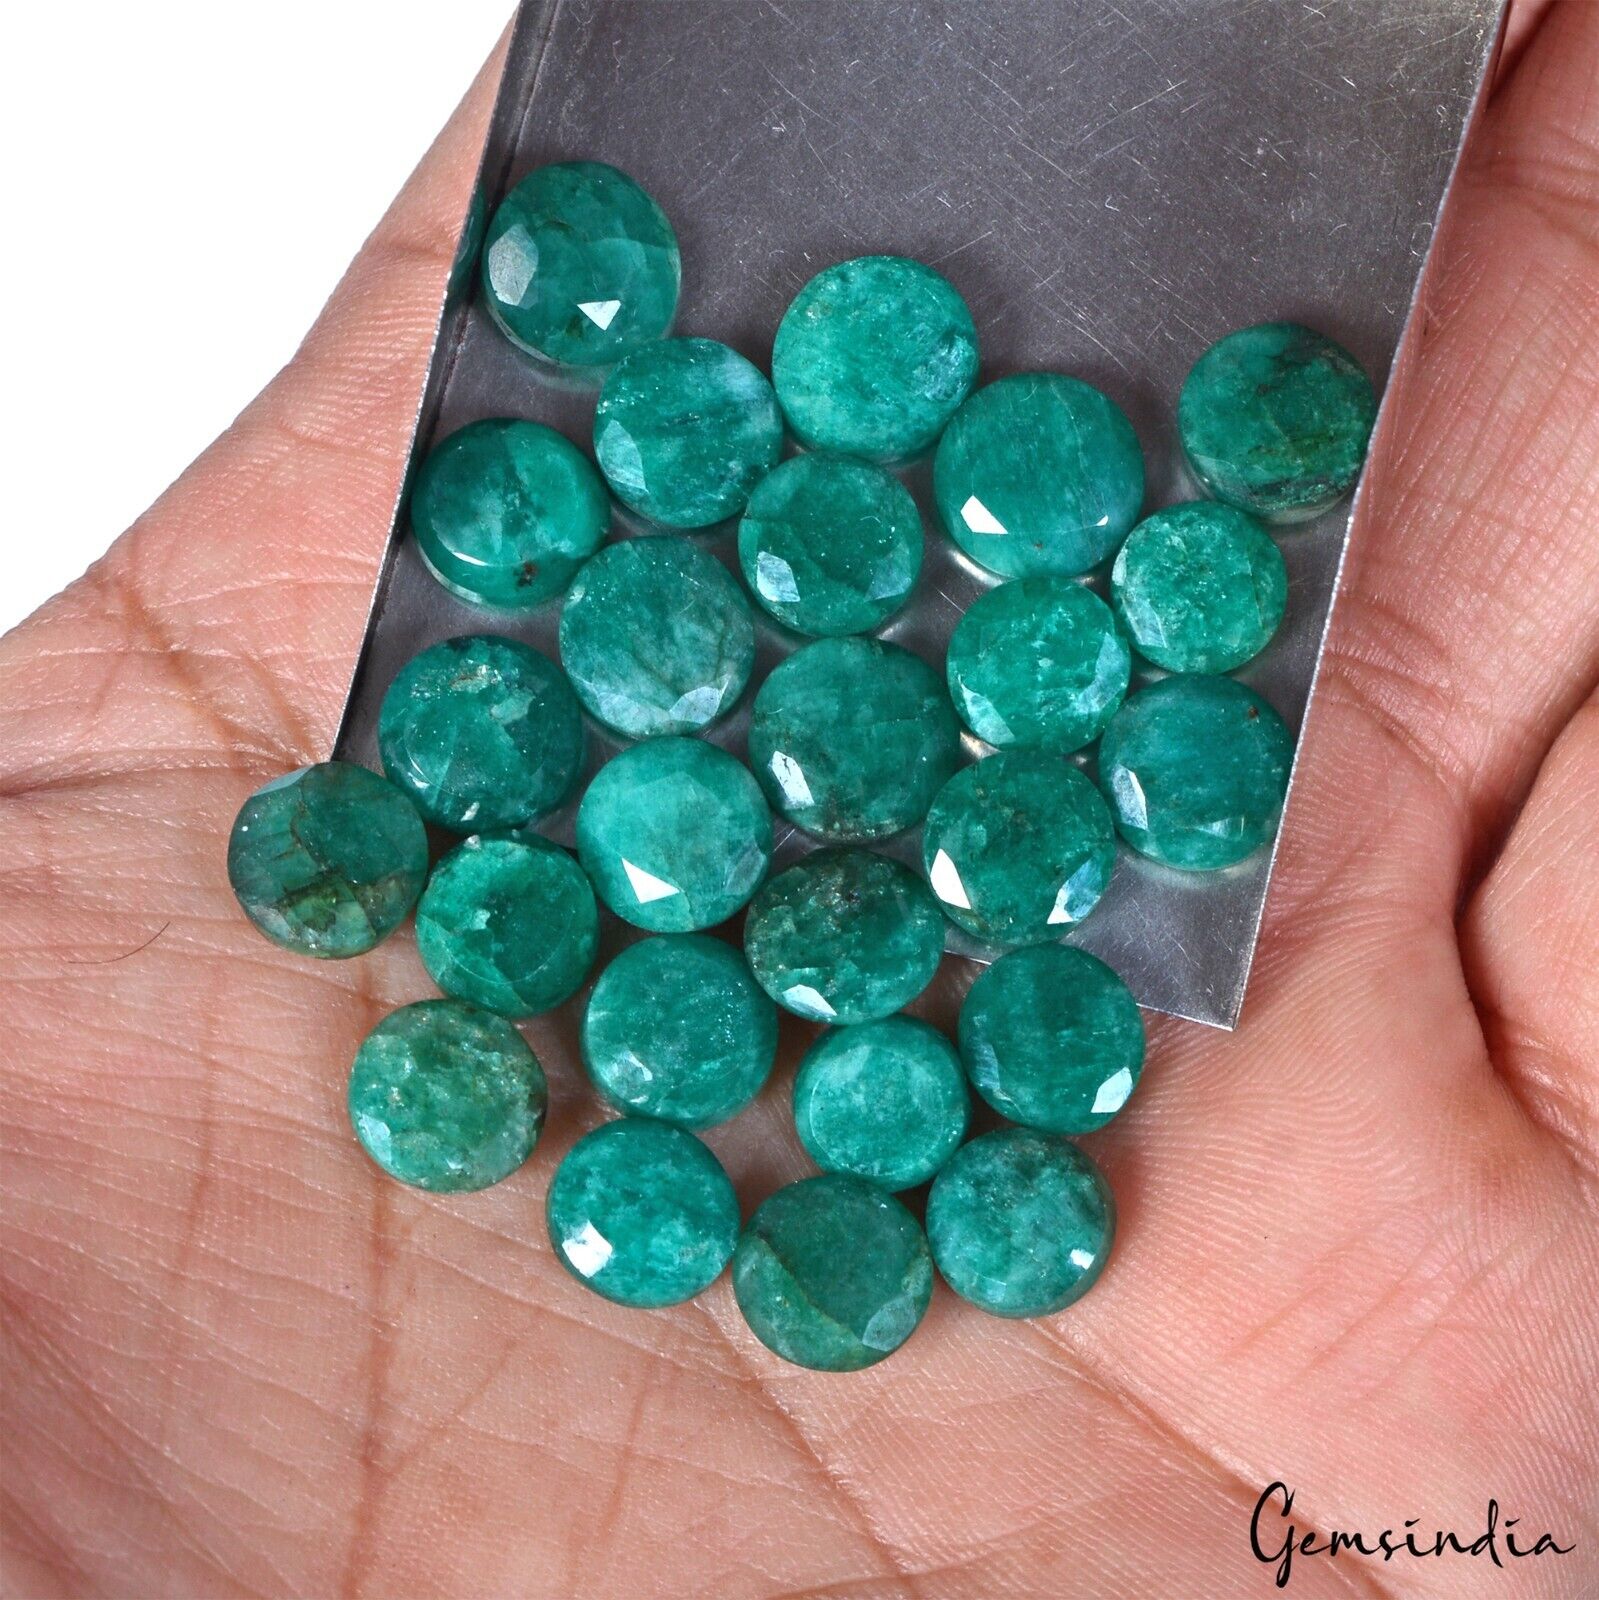 Treated Certified Emerald Green Round Cut 63.40 Cts 25 Pcs Zambian Emerald Stone #gemsindia Does not apply